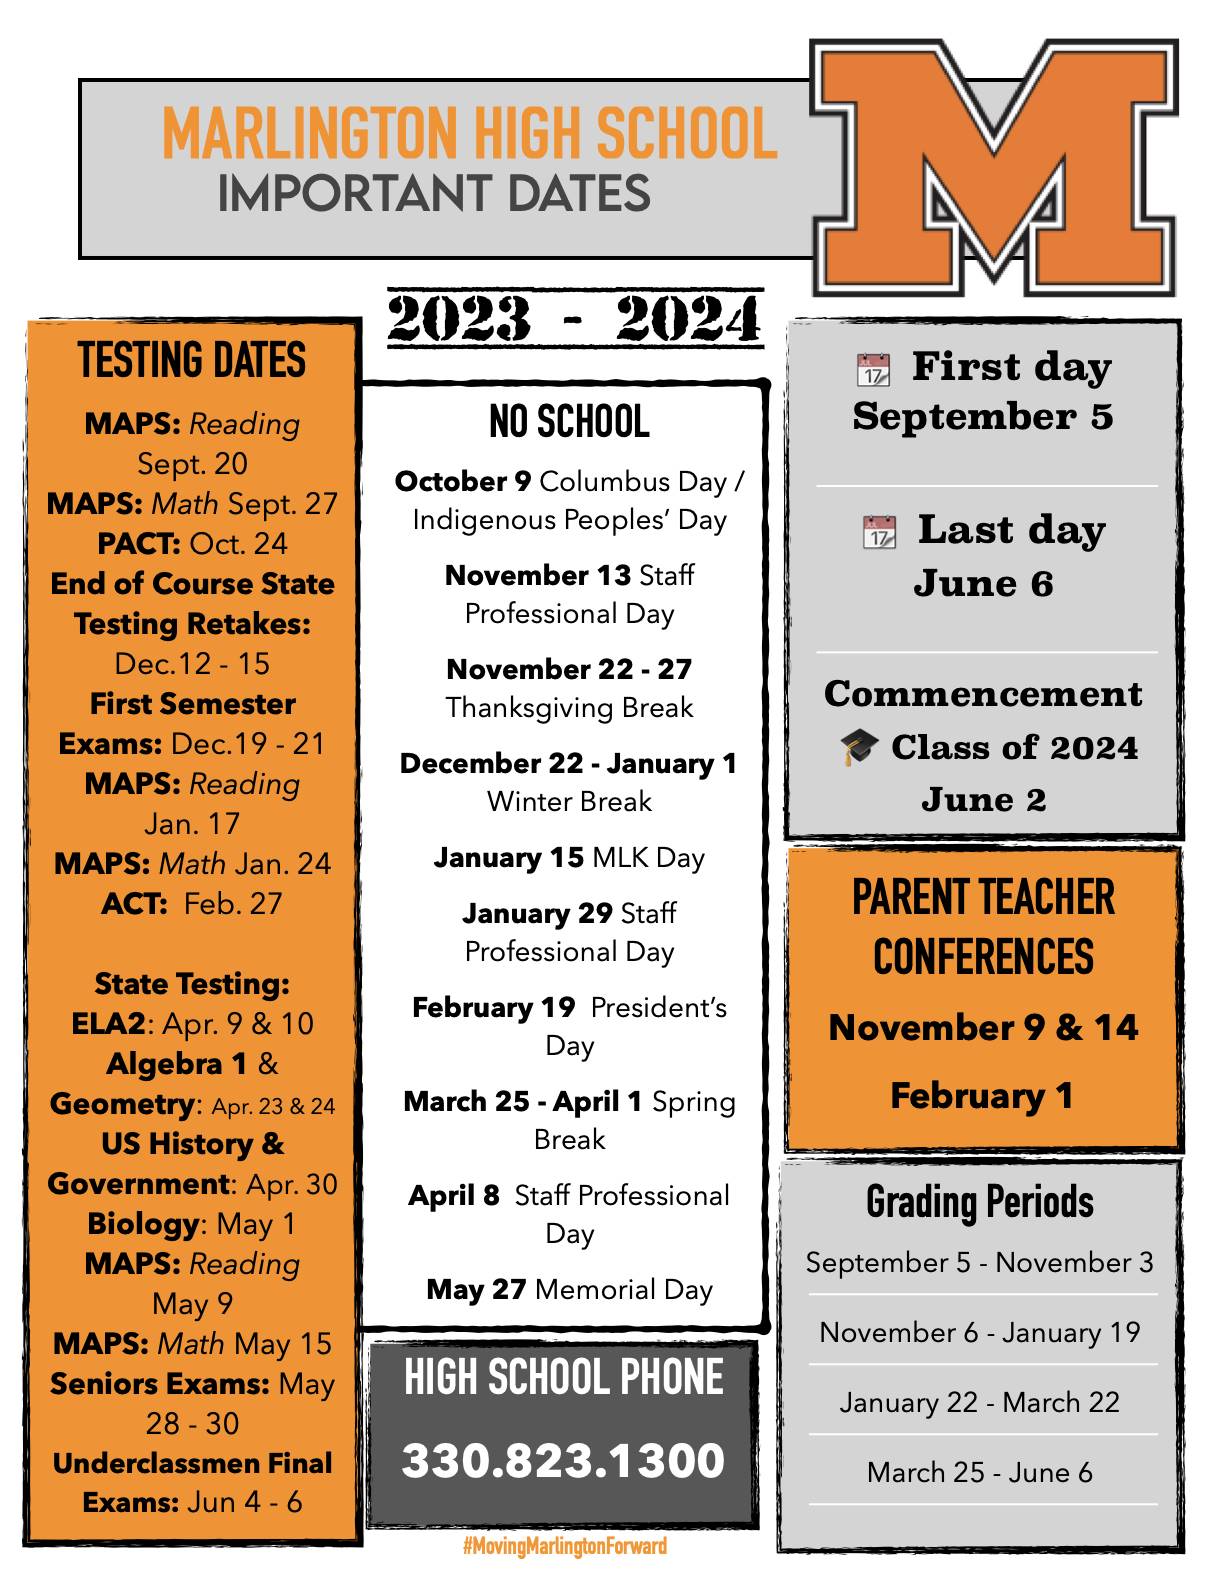 MHS Important Dates 2023-24